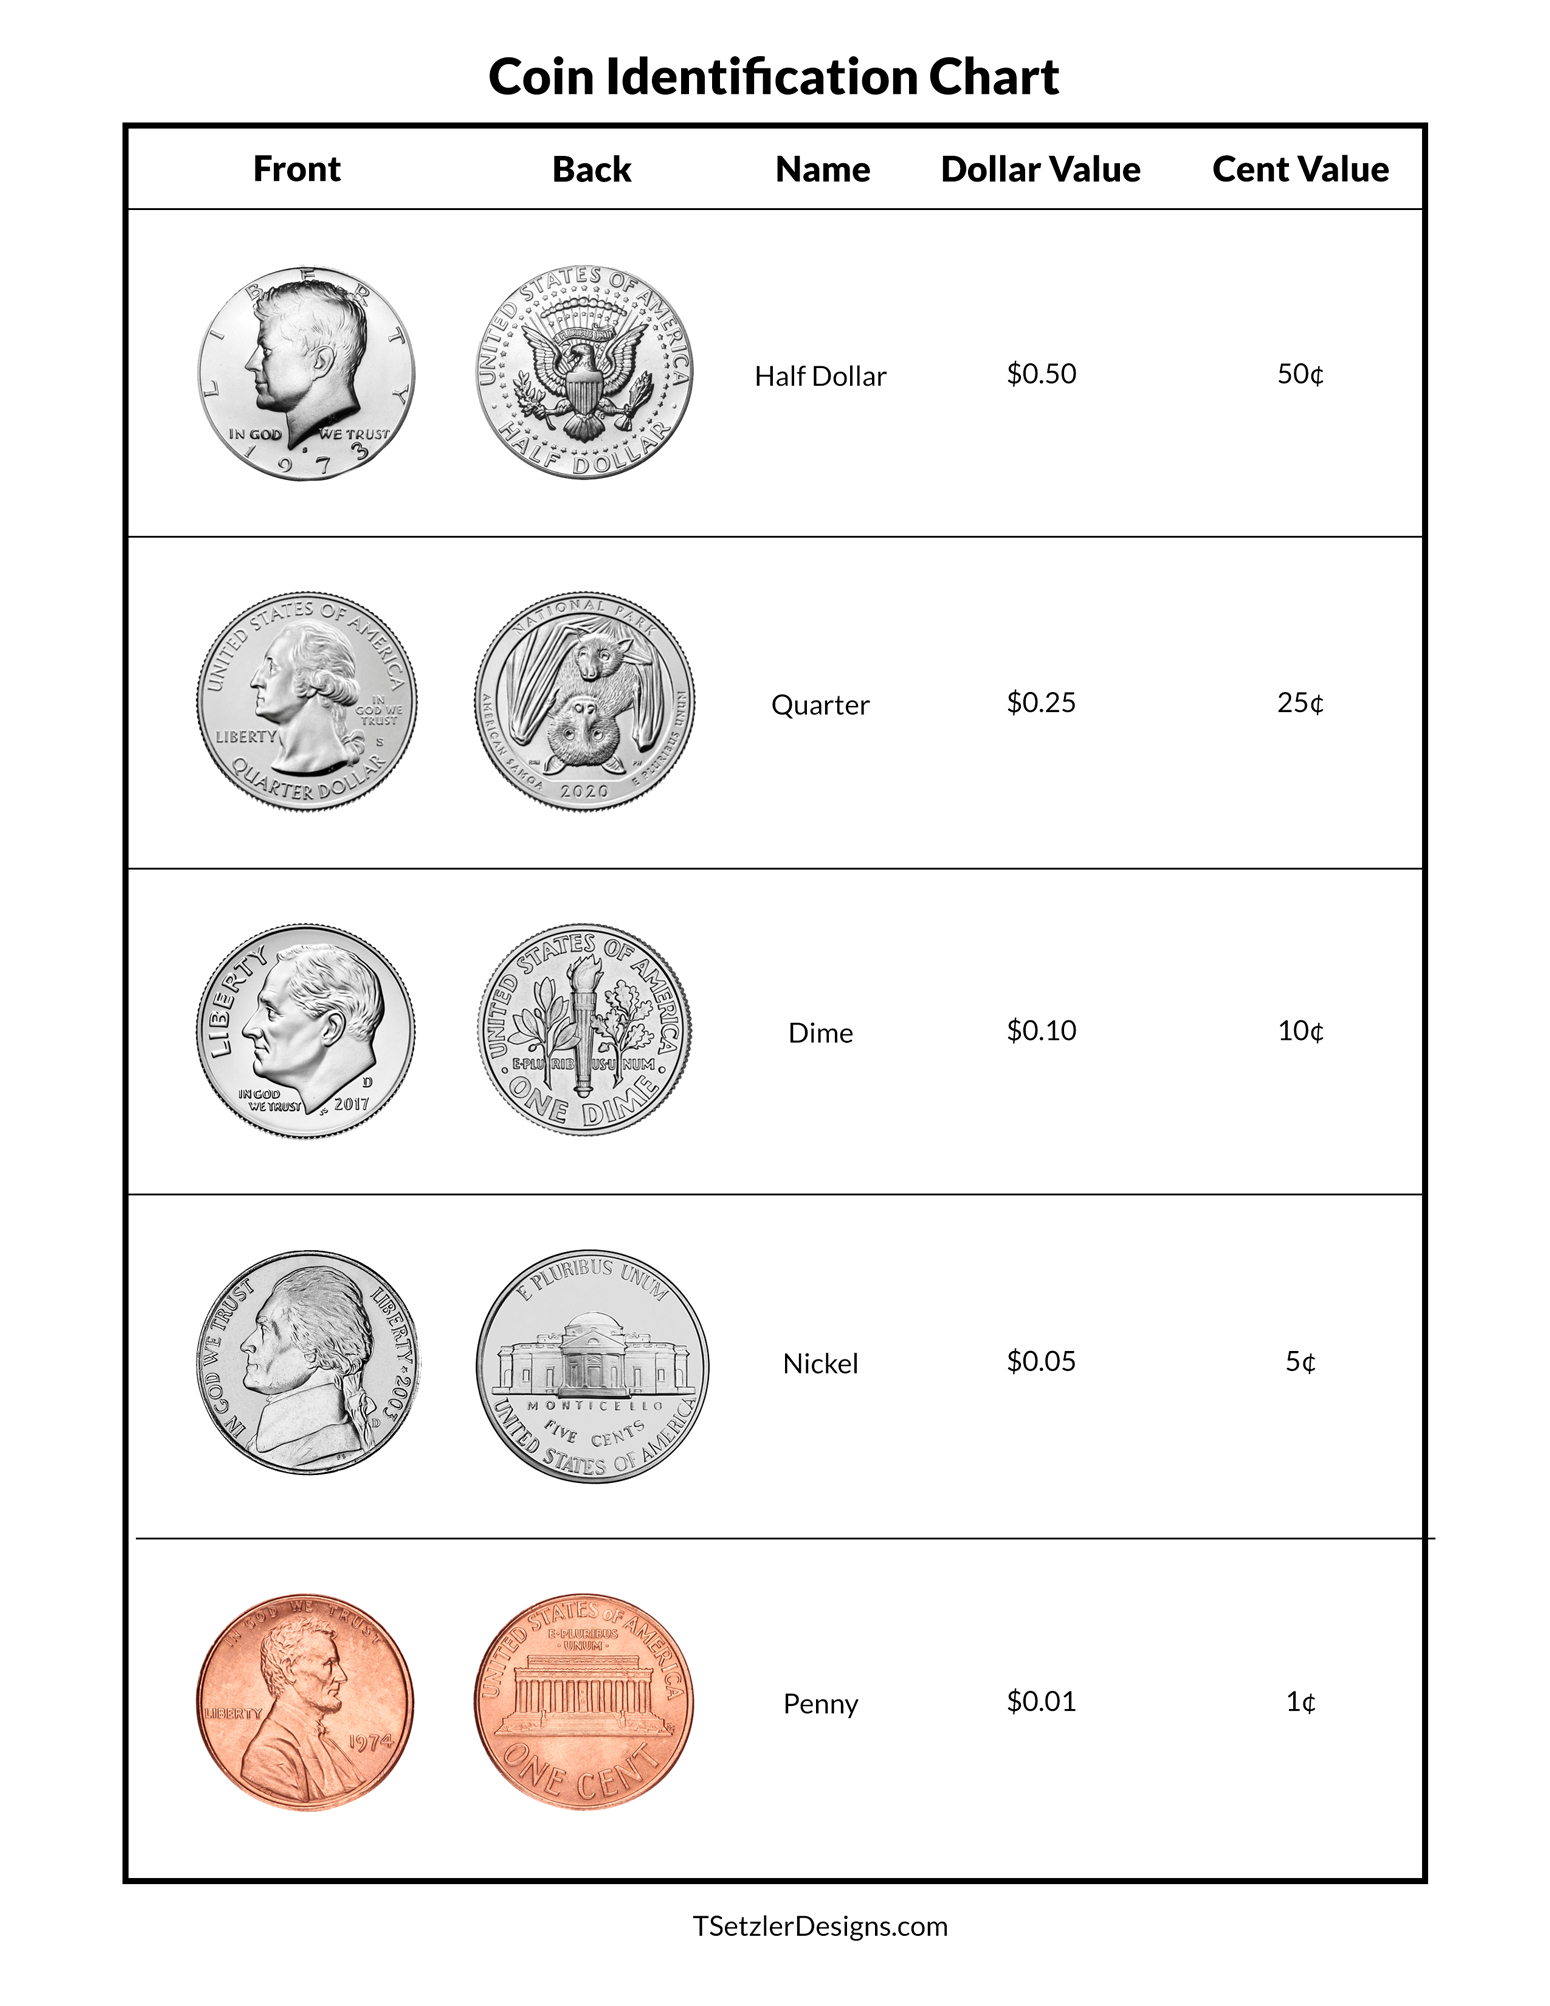 coin-identification-chart-tsetzler-designs